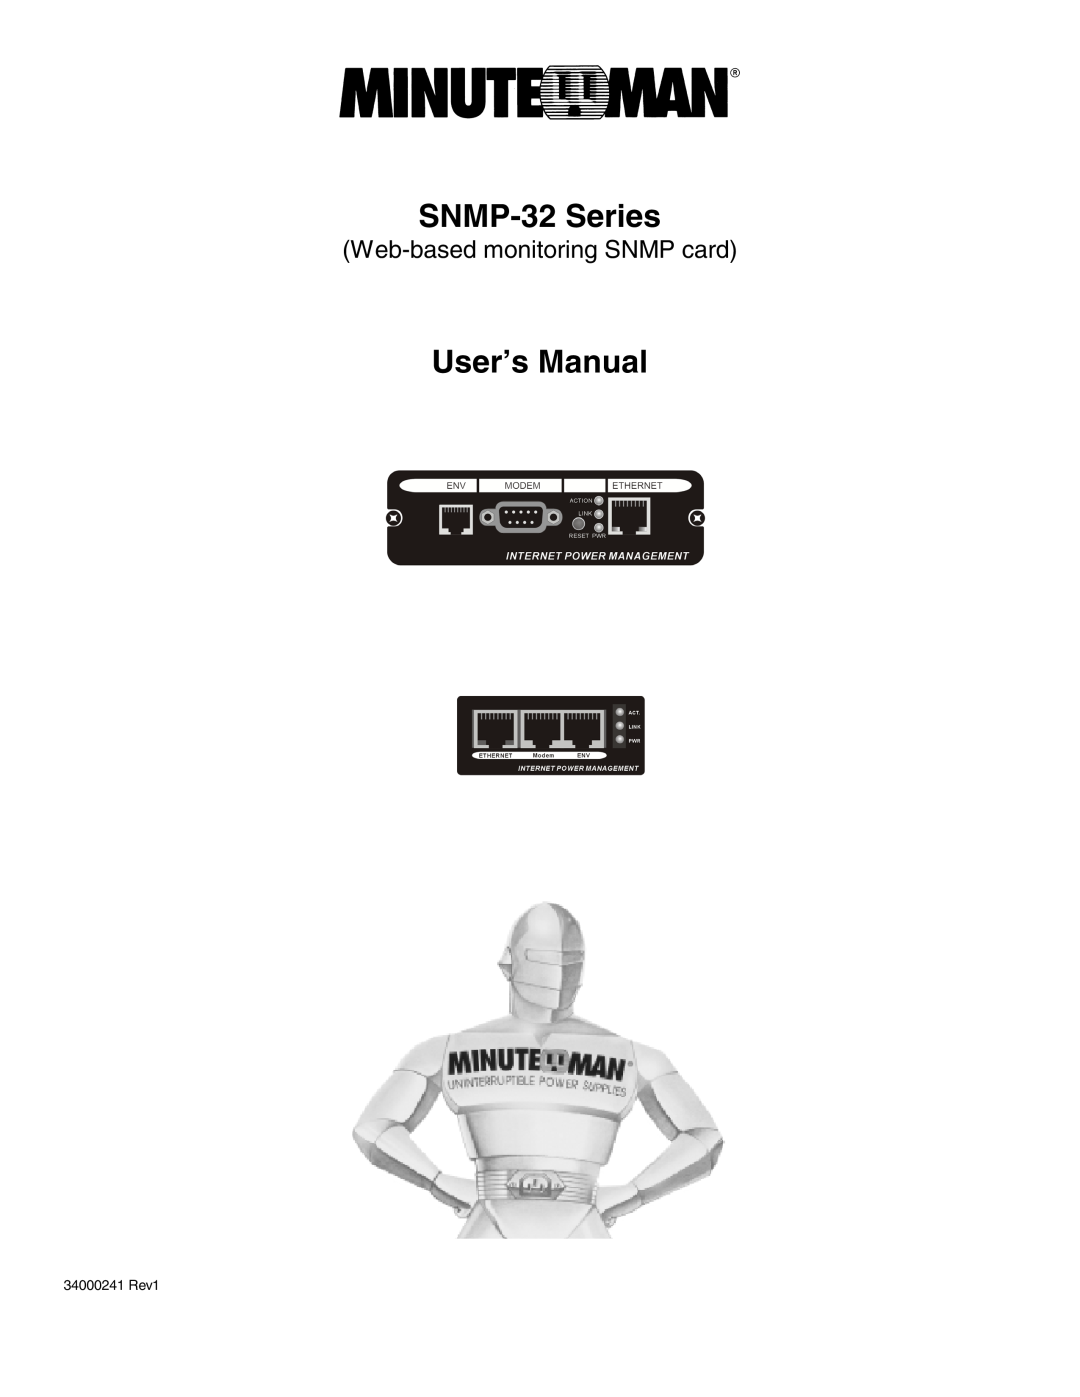 Minuteman UPS SNMP-32 Series user manual Web-based monitoring SNMP card, User’s Manual, 34000241 Rev1 